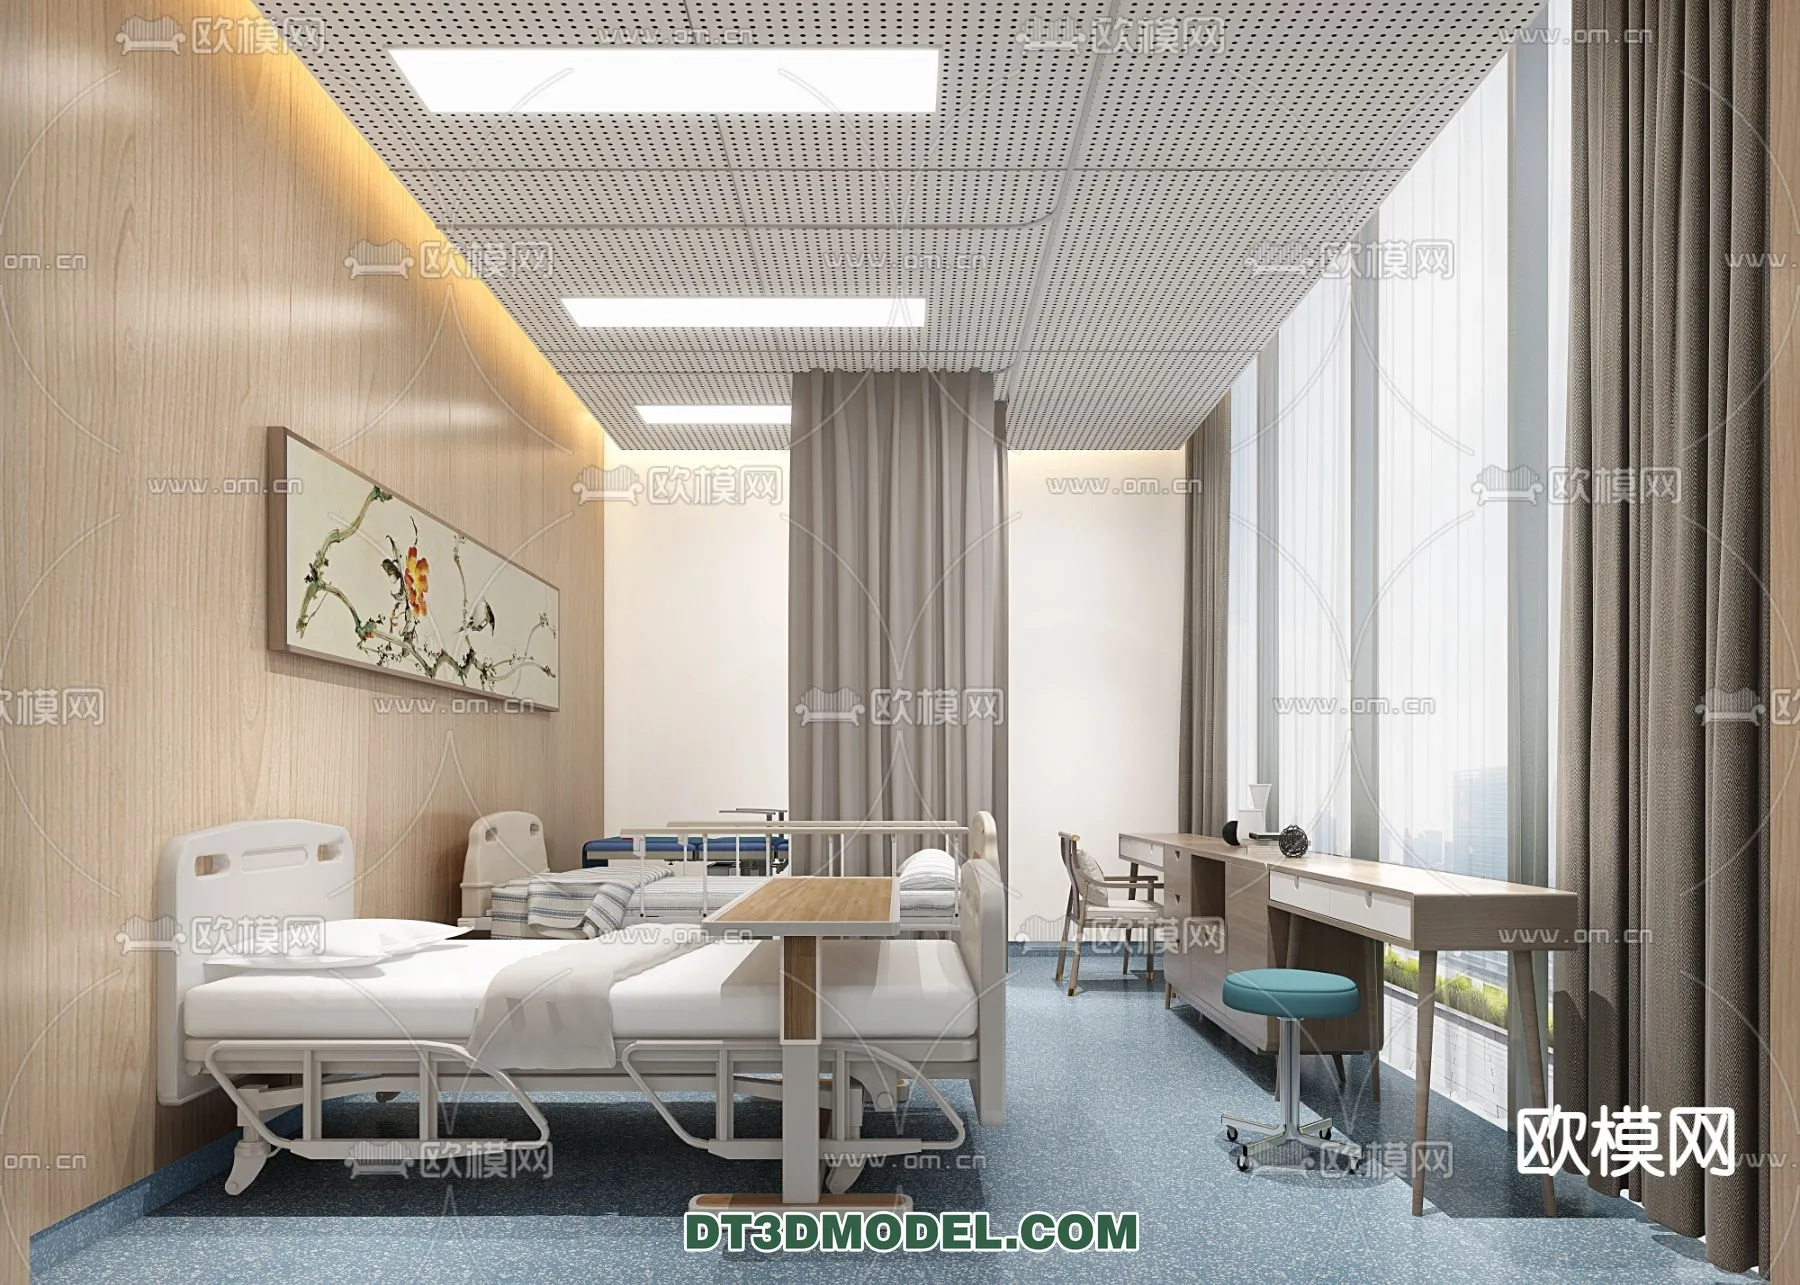 HOSPITAL 3D SCENES – MODERN – 0169